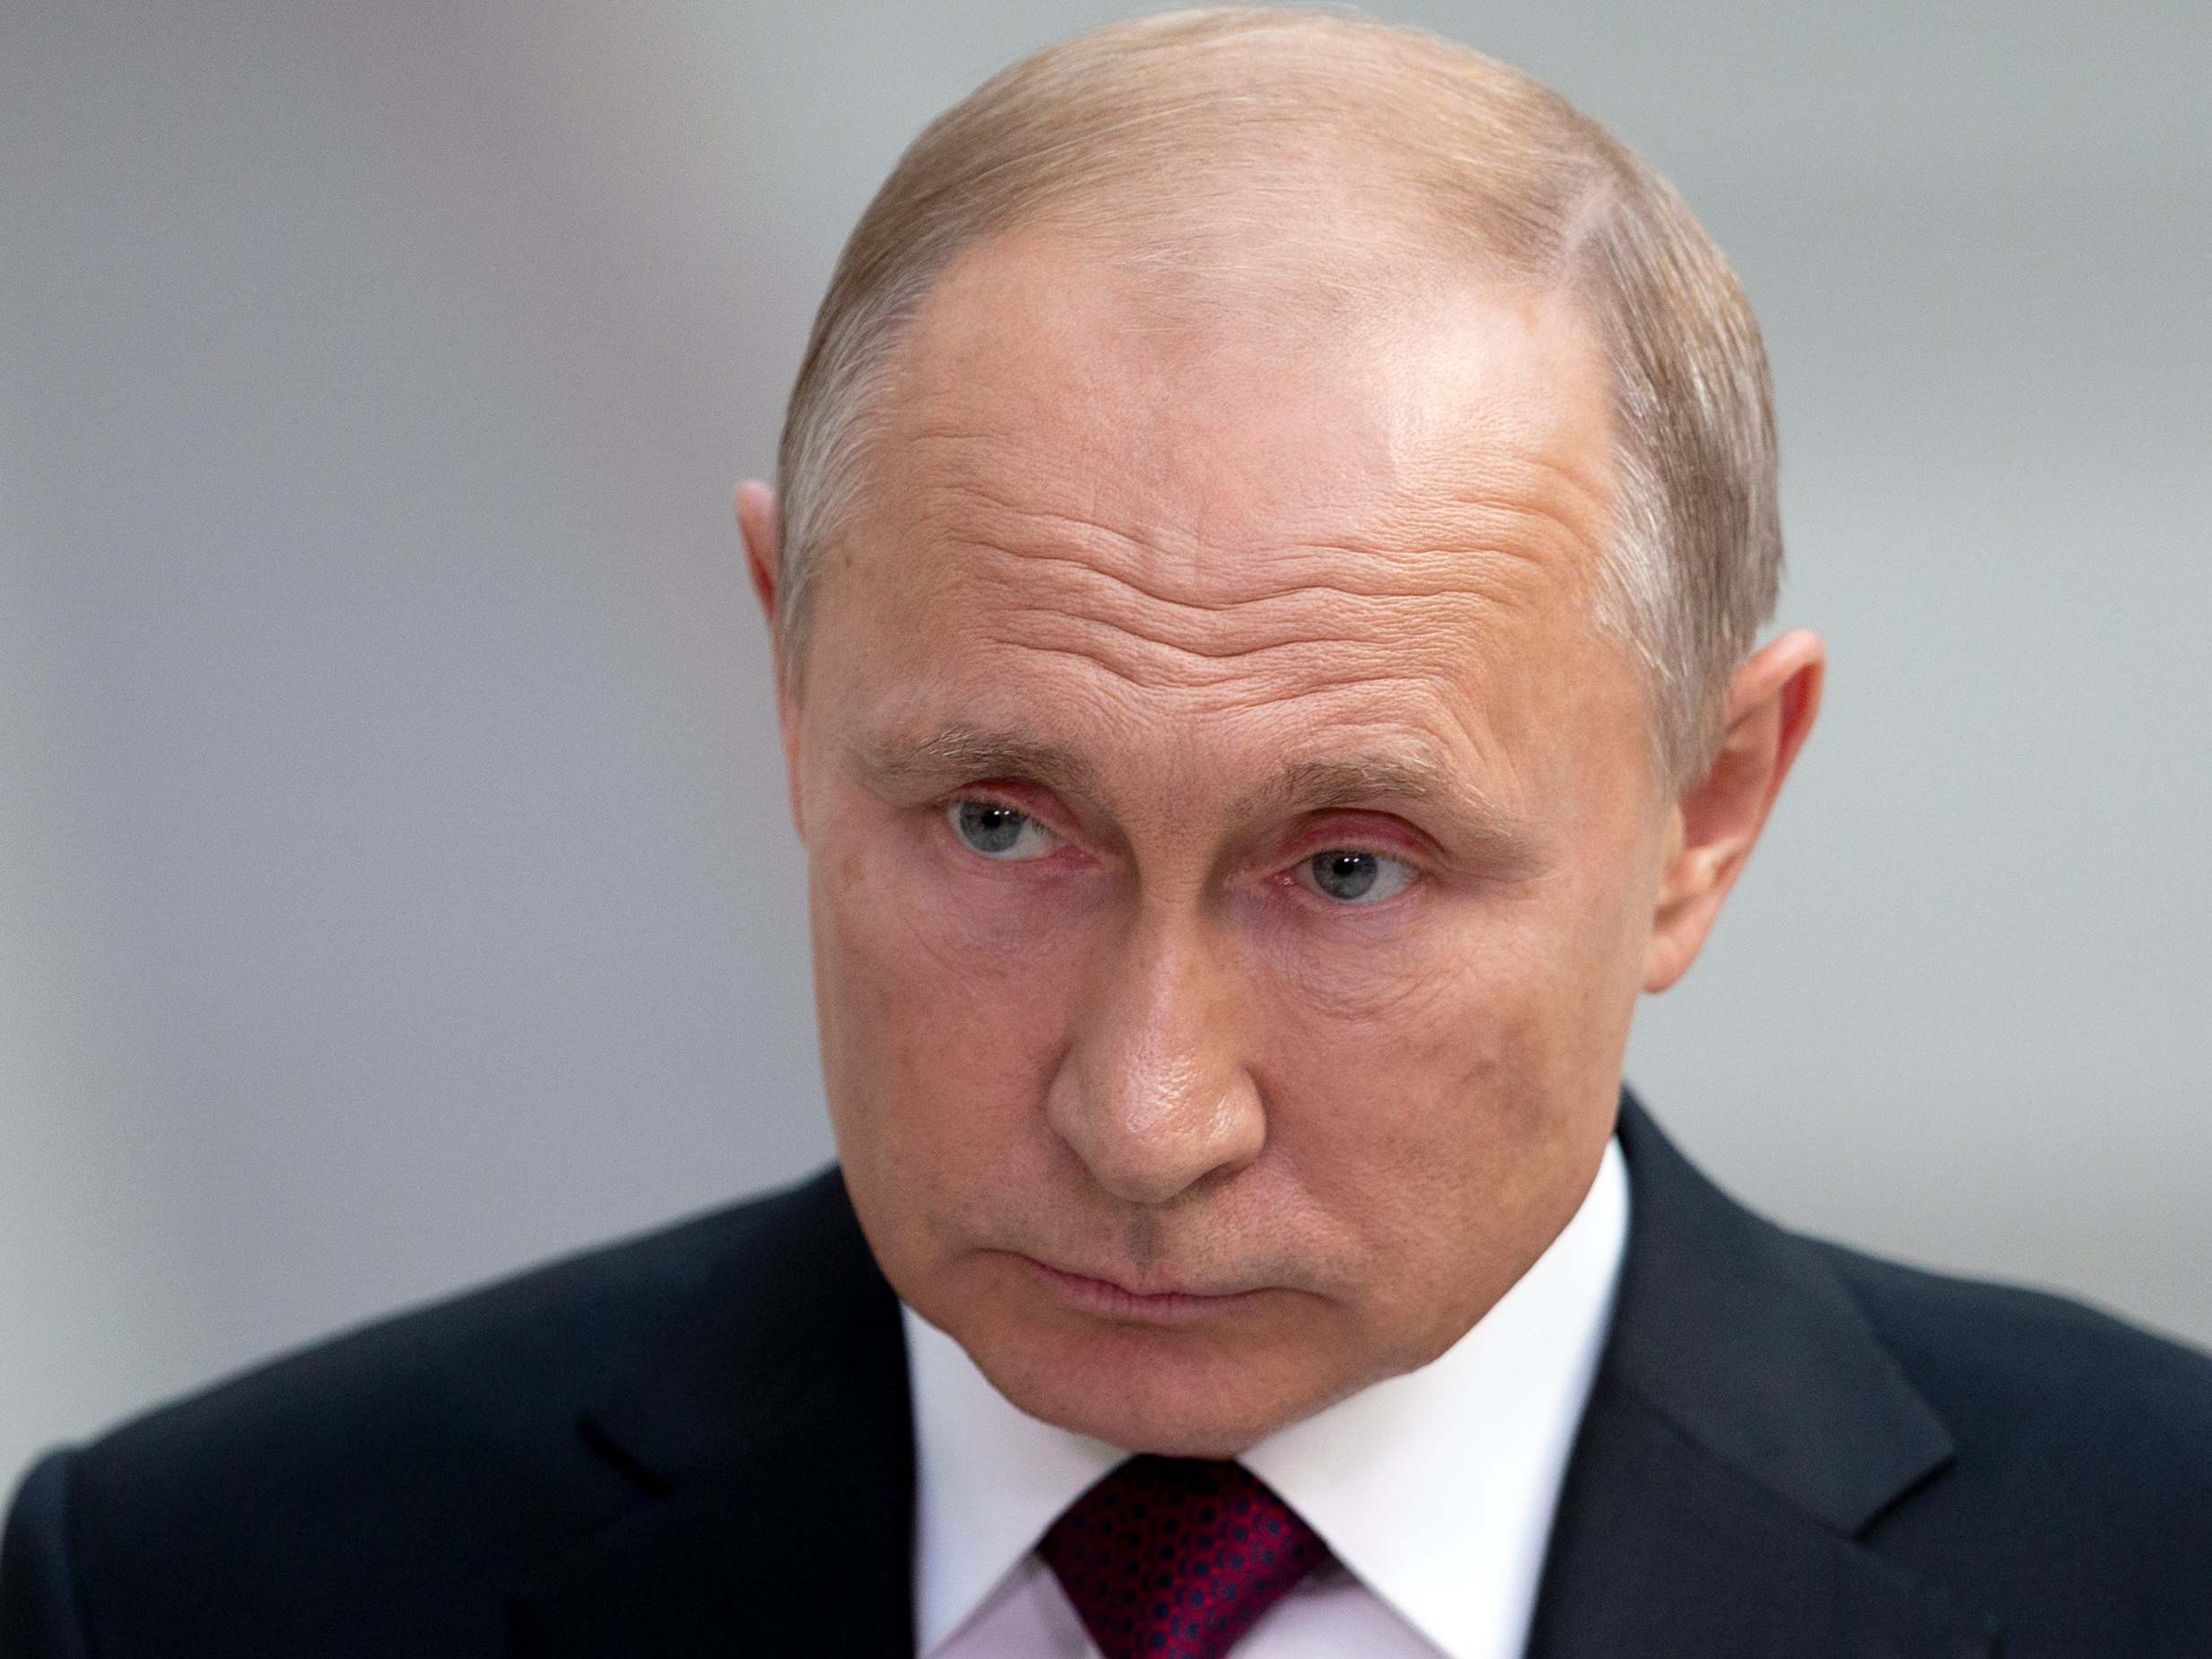 Vladimir Putin mocked the Conservative leadership race